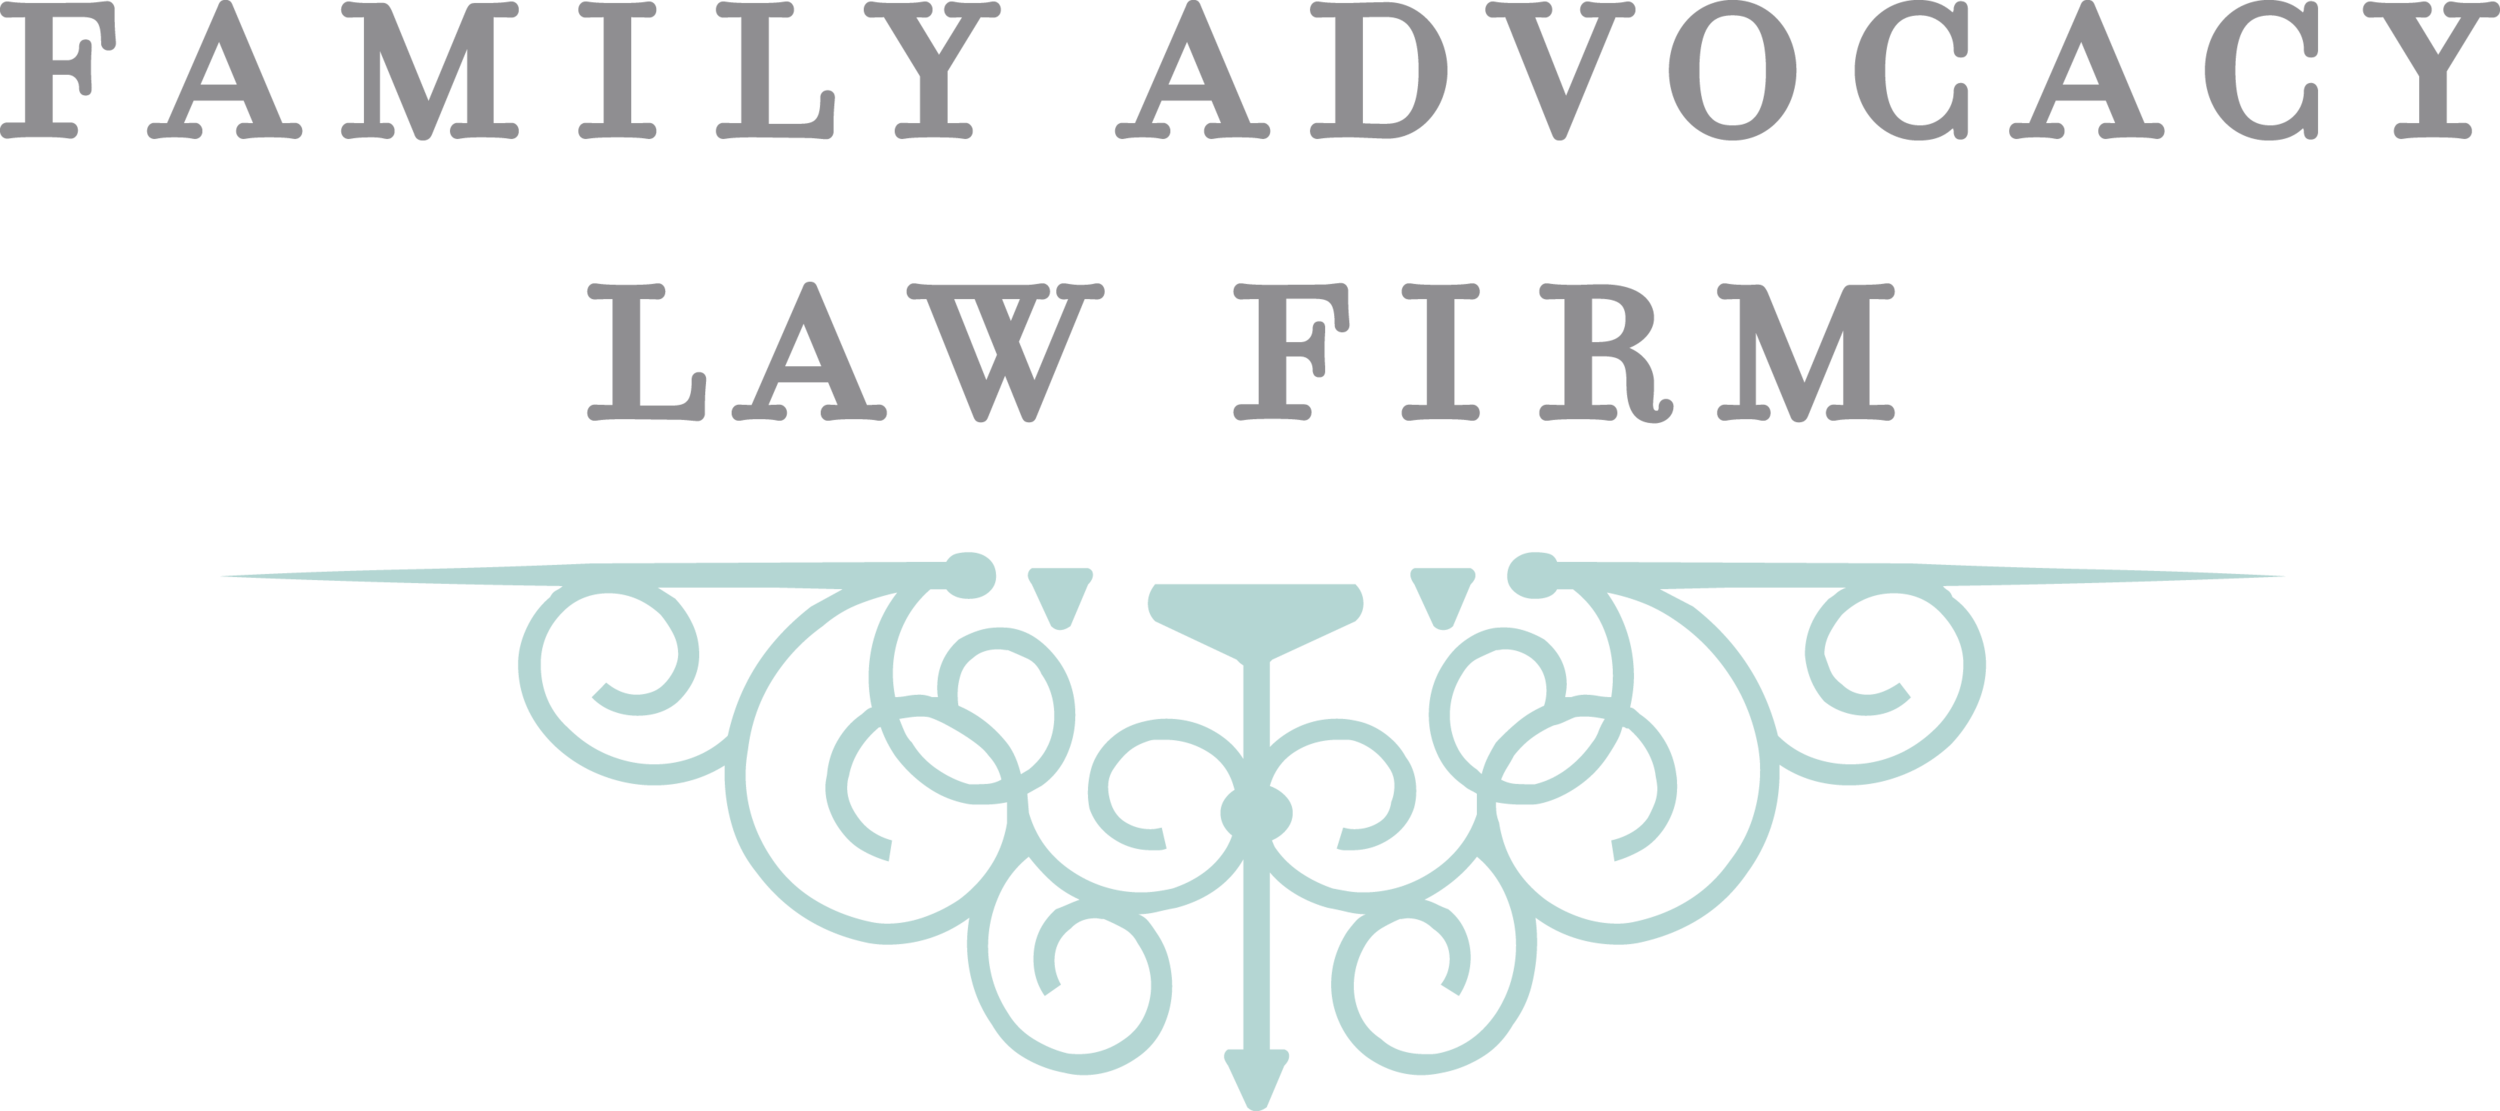 Family Advocacy Law Firm